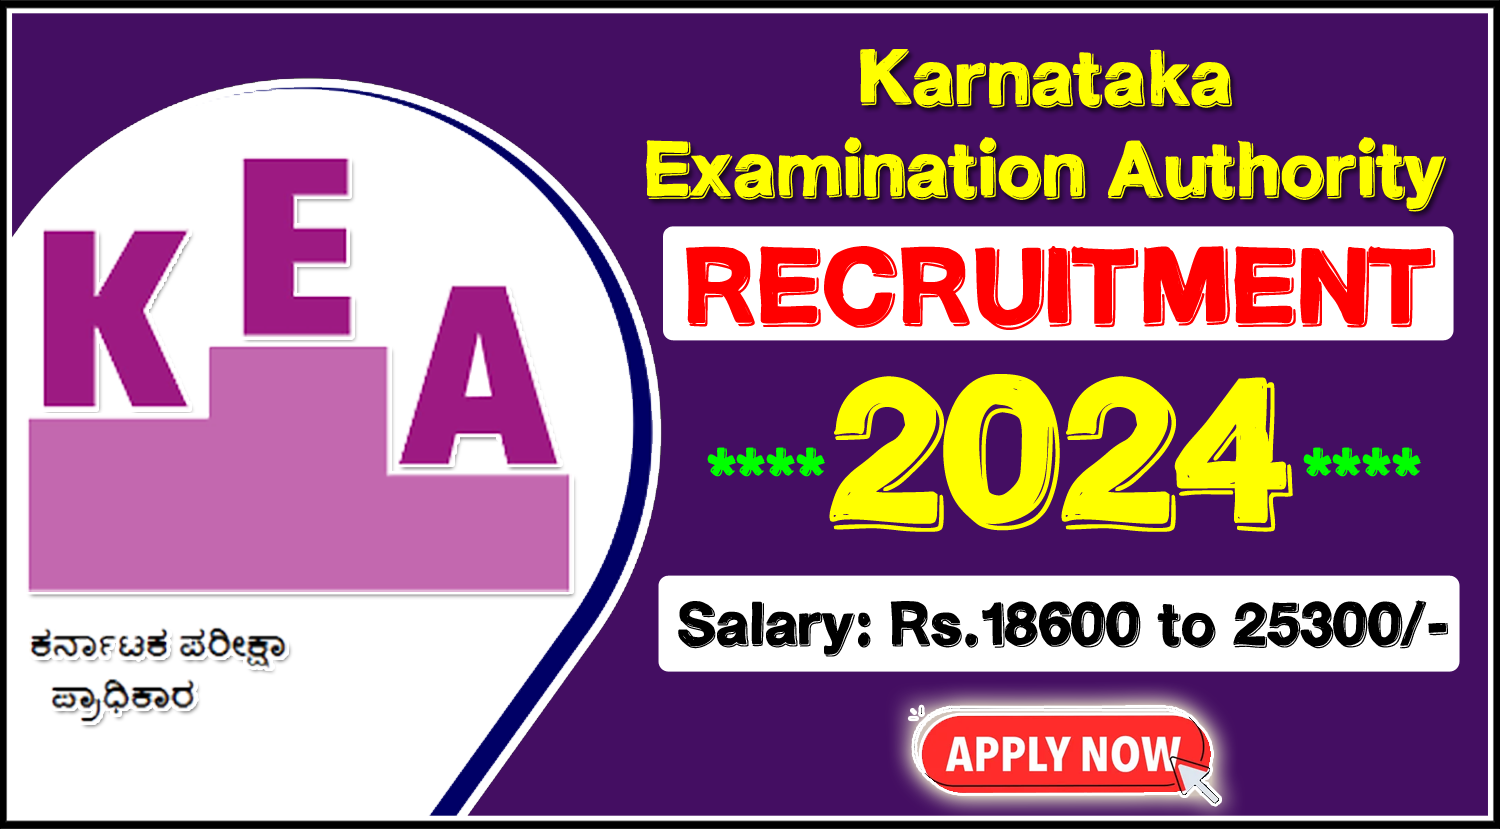 Karnataka Examination Authority Recruitment